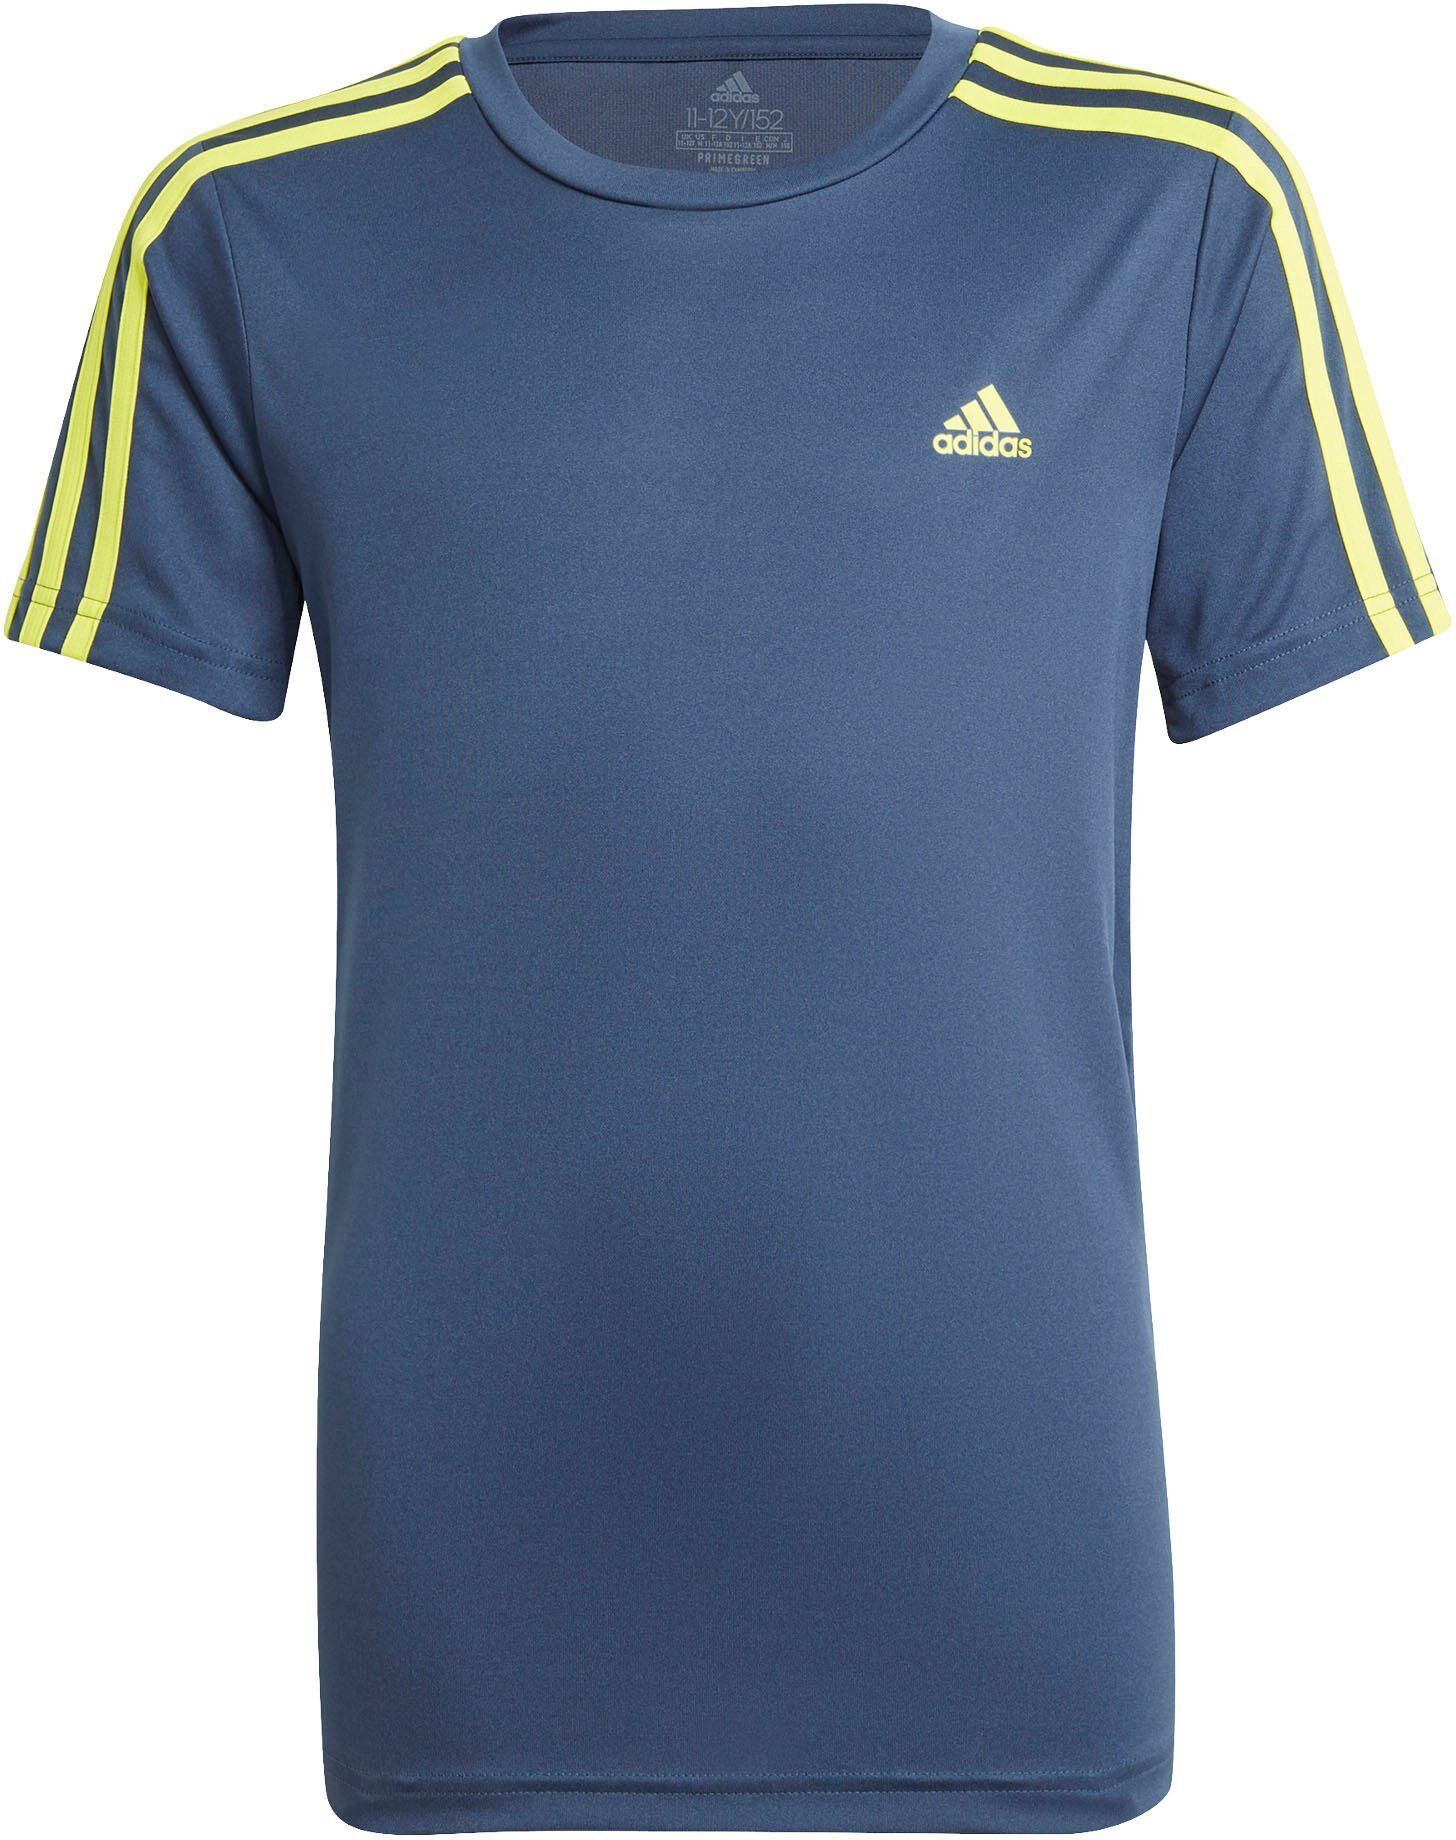 Adidas Performance Funktionsshirt »B 3S T«, dunkelblau-gelb